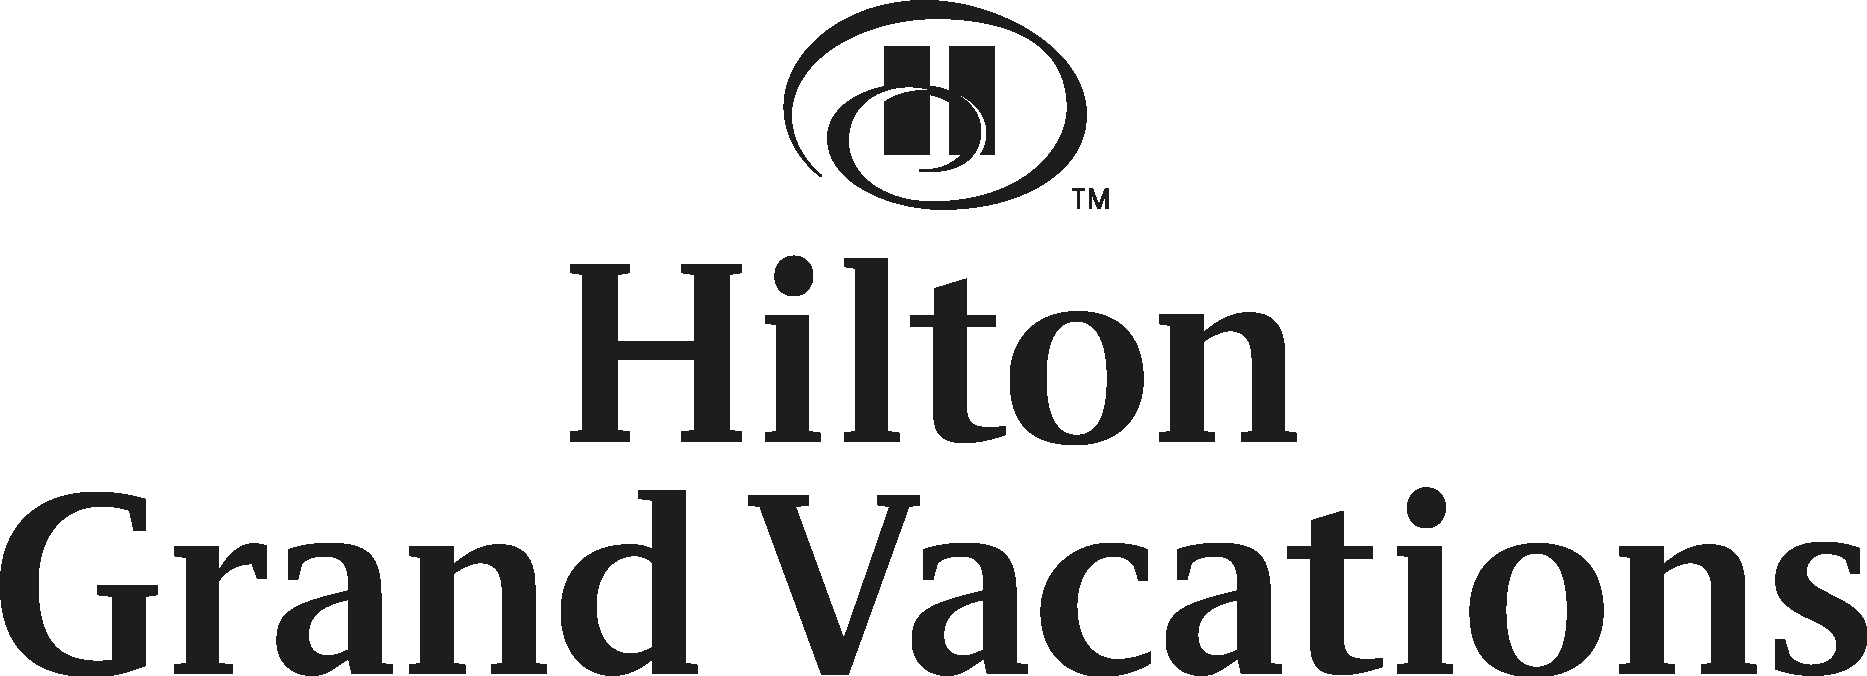 Hilton Grand Vacations black Logo Vector